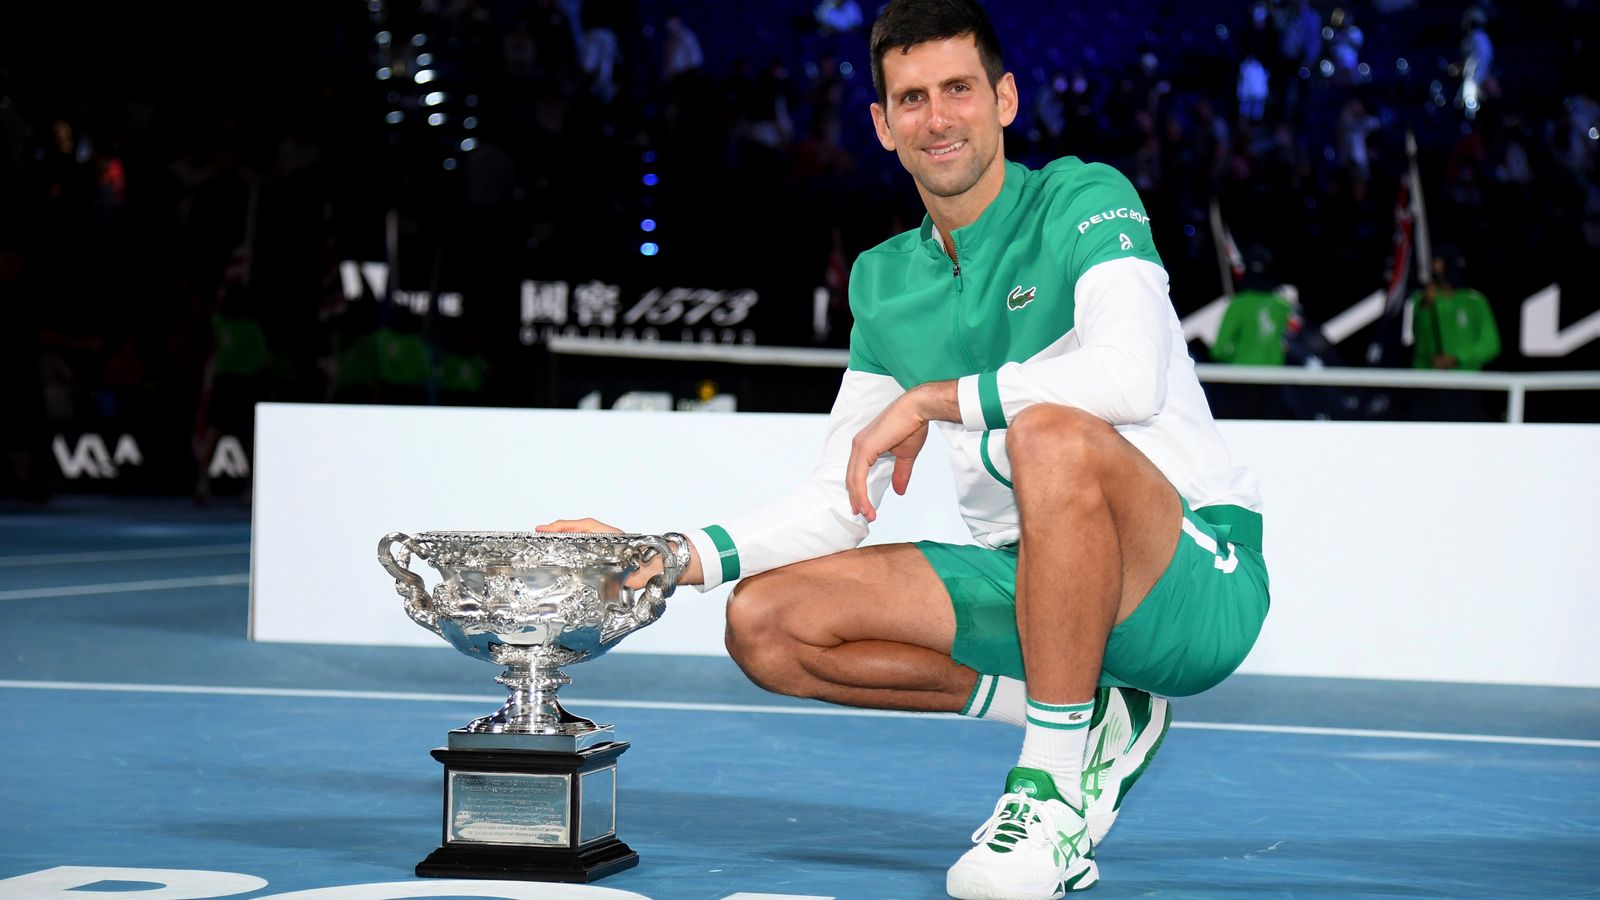 Australian Open Men's Draw as Novak Djokovic successfully defends his